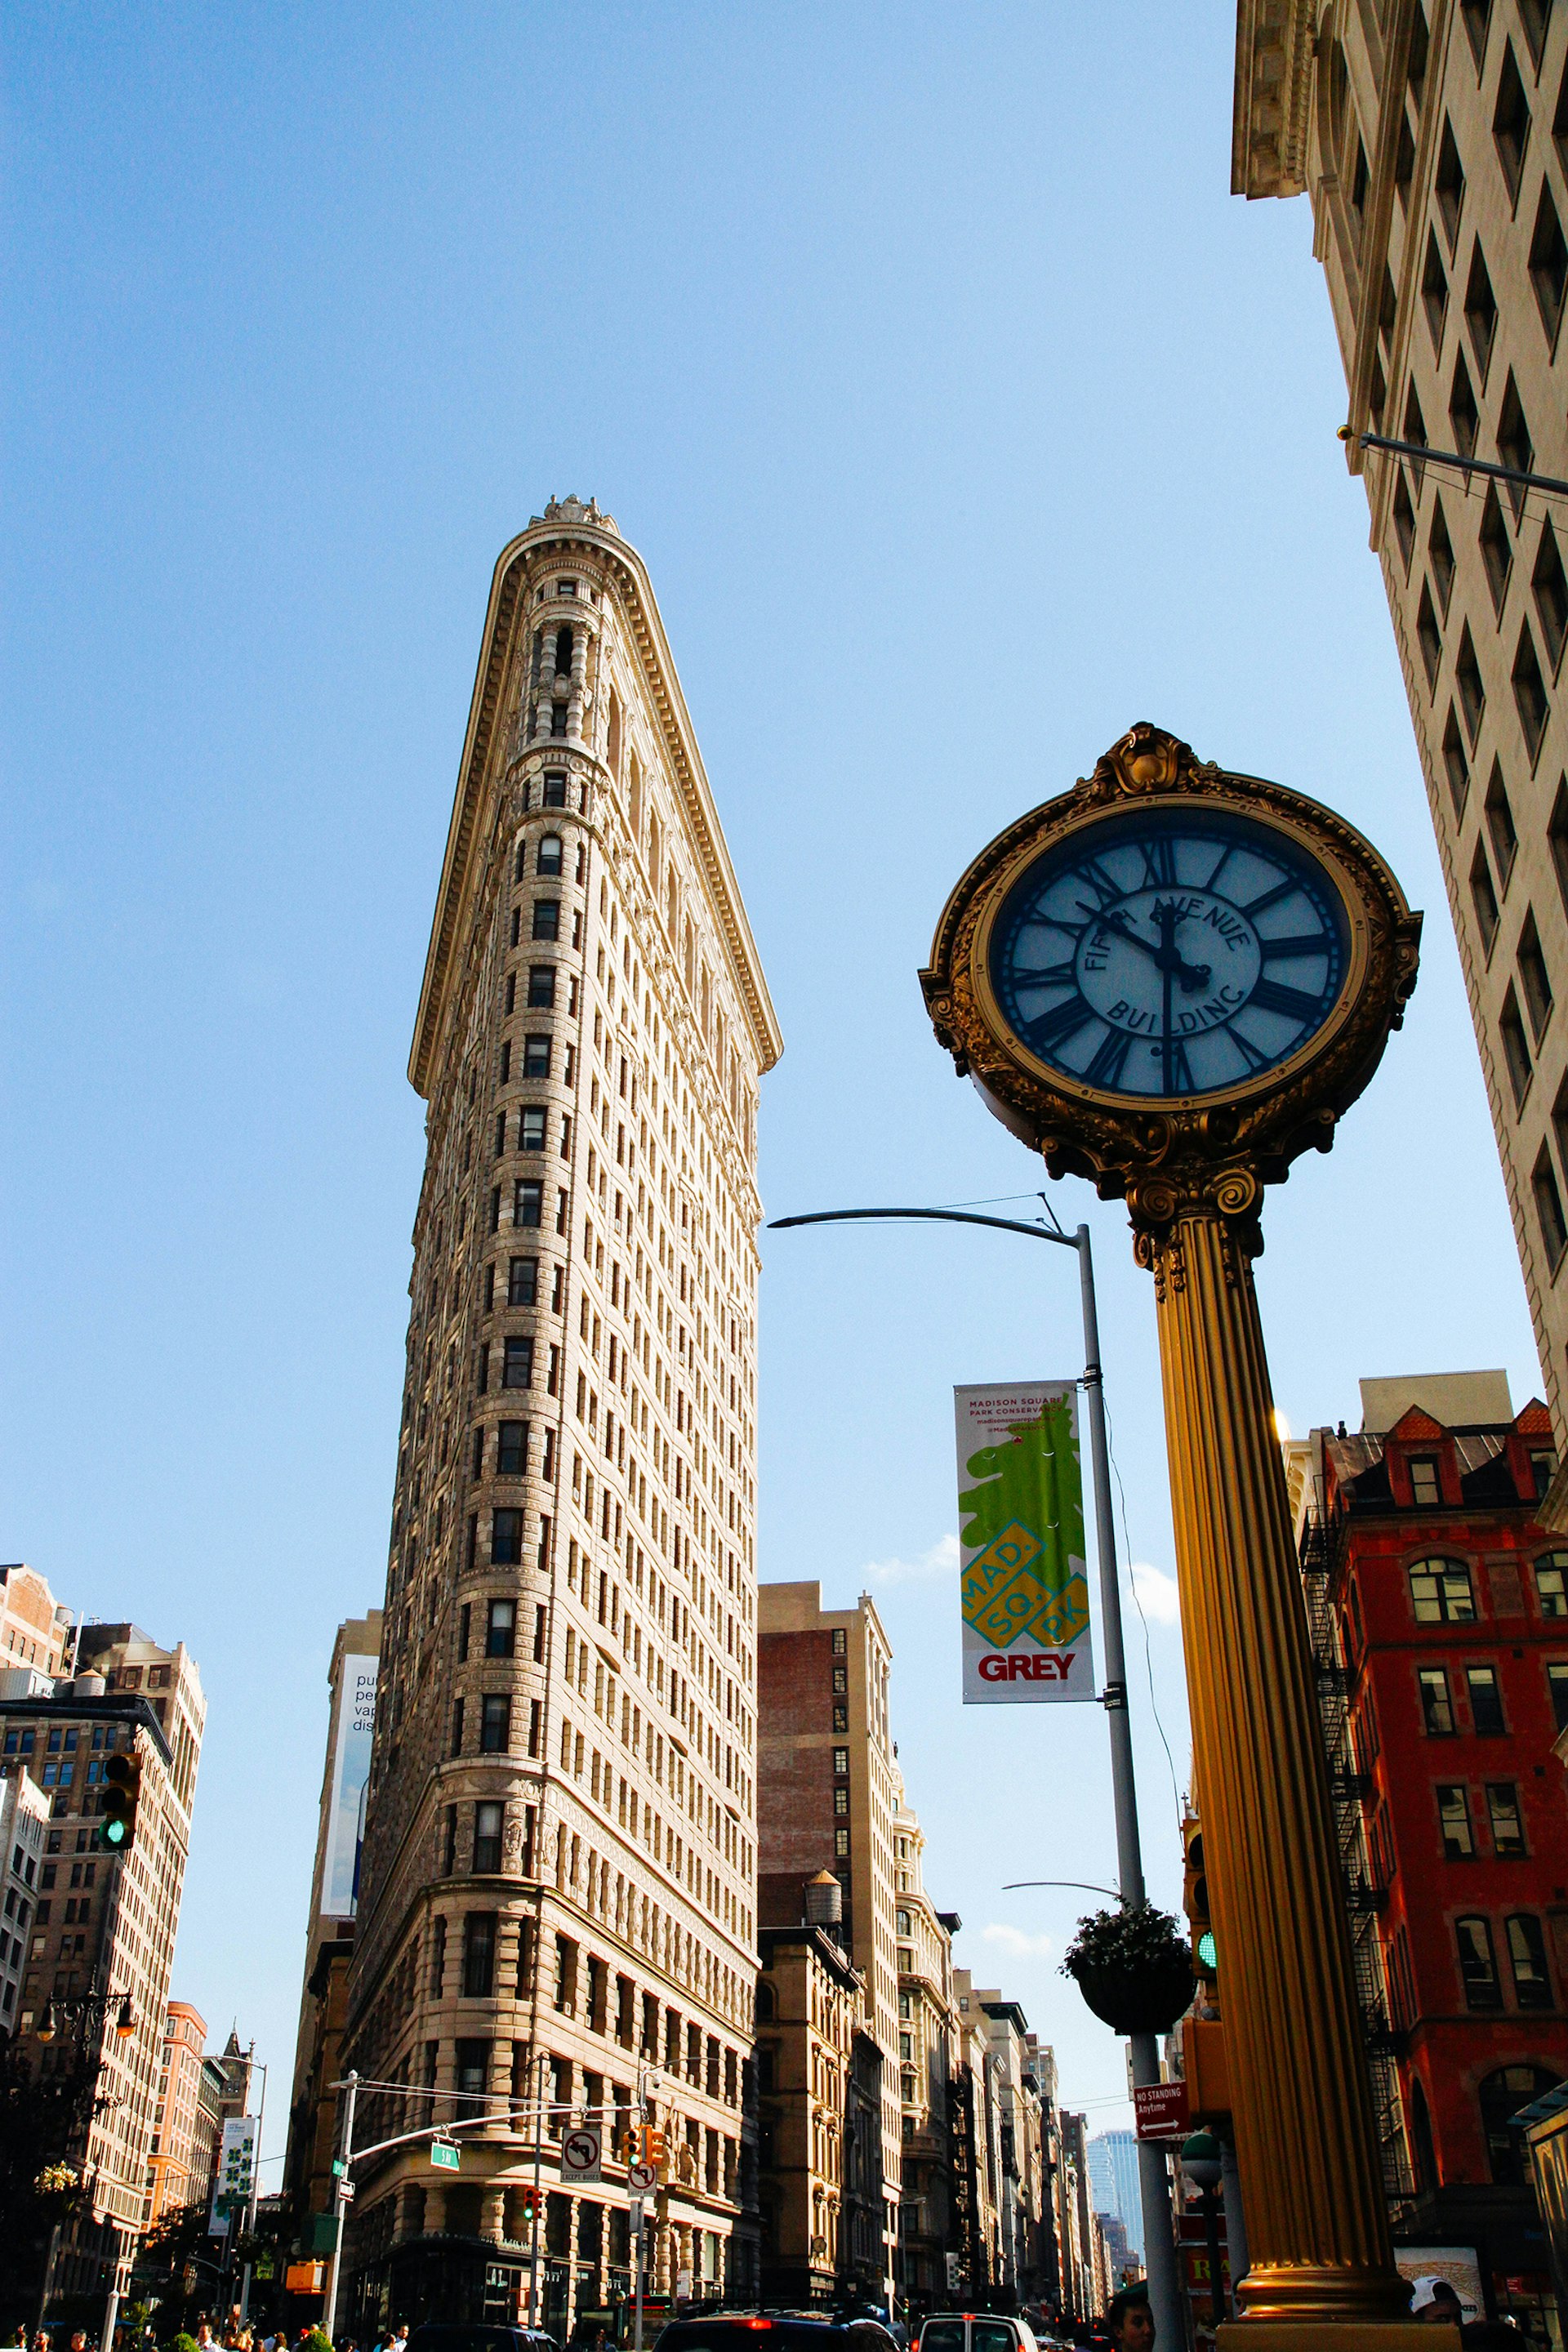 The Flatiron Building in New York City